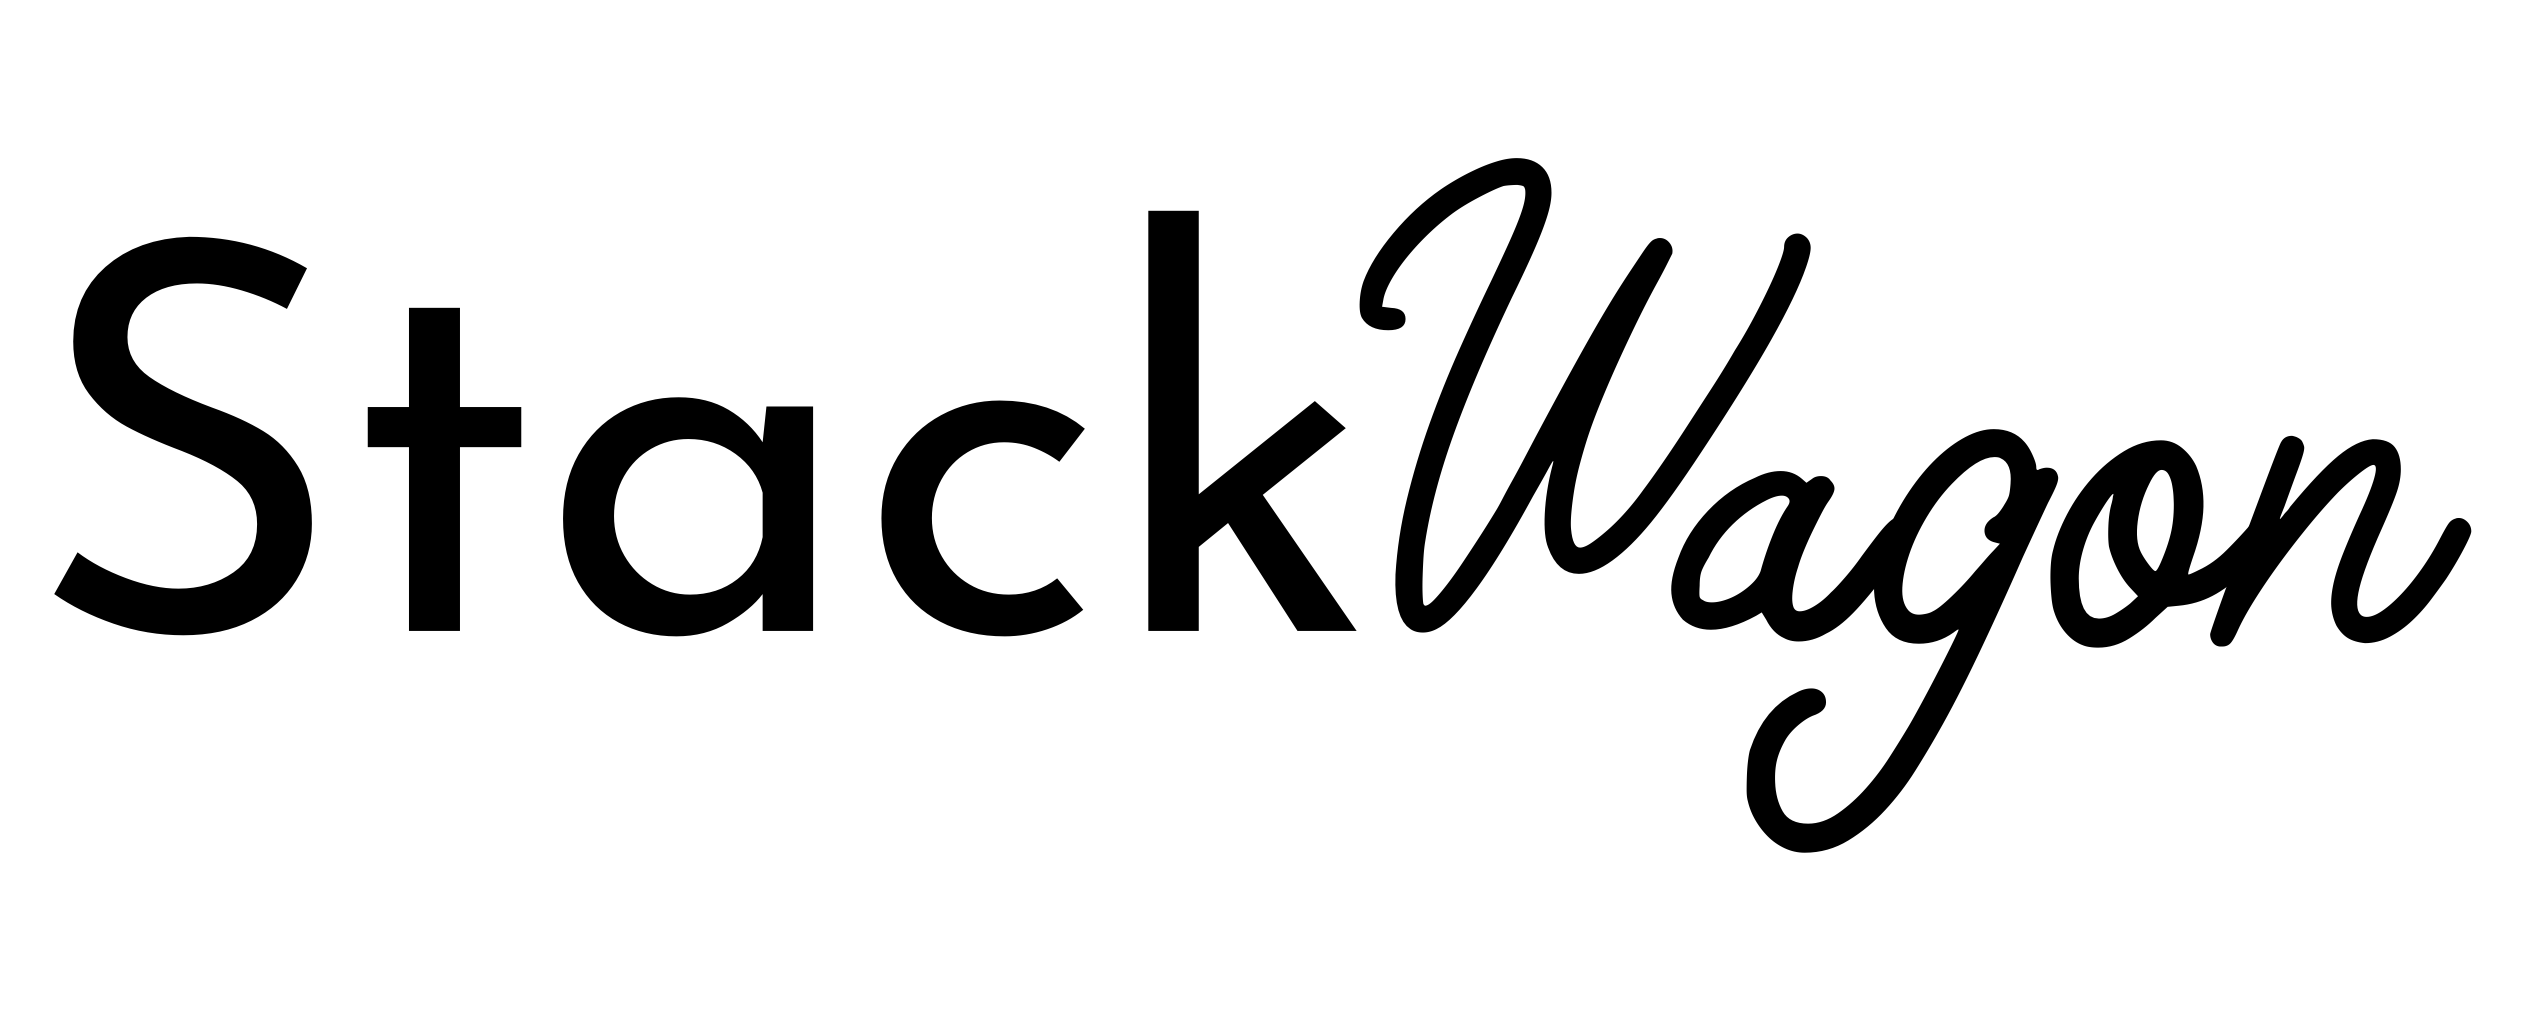 Stackwagon logo